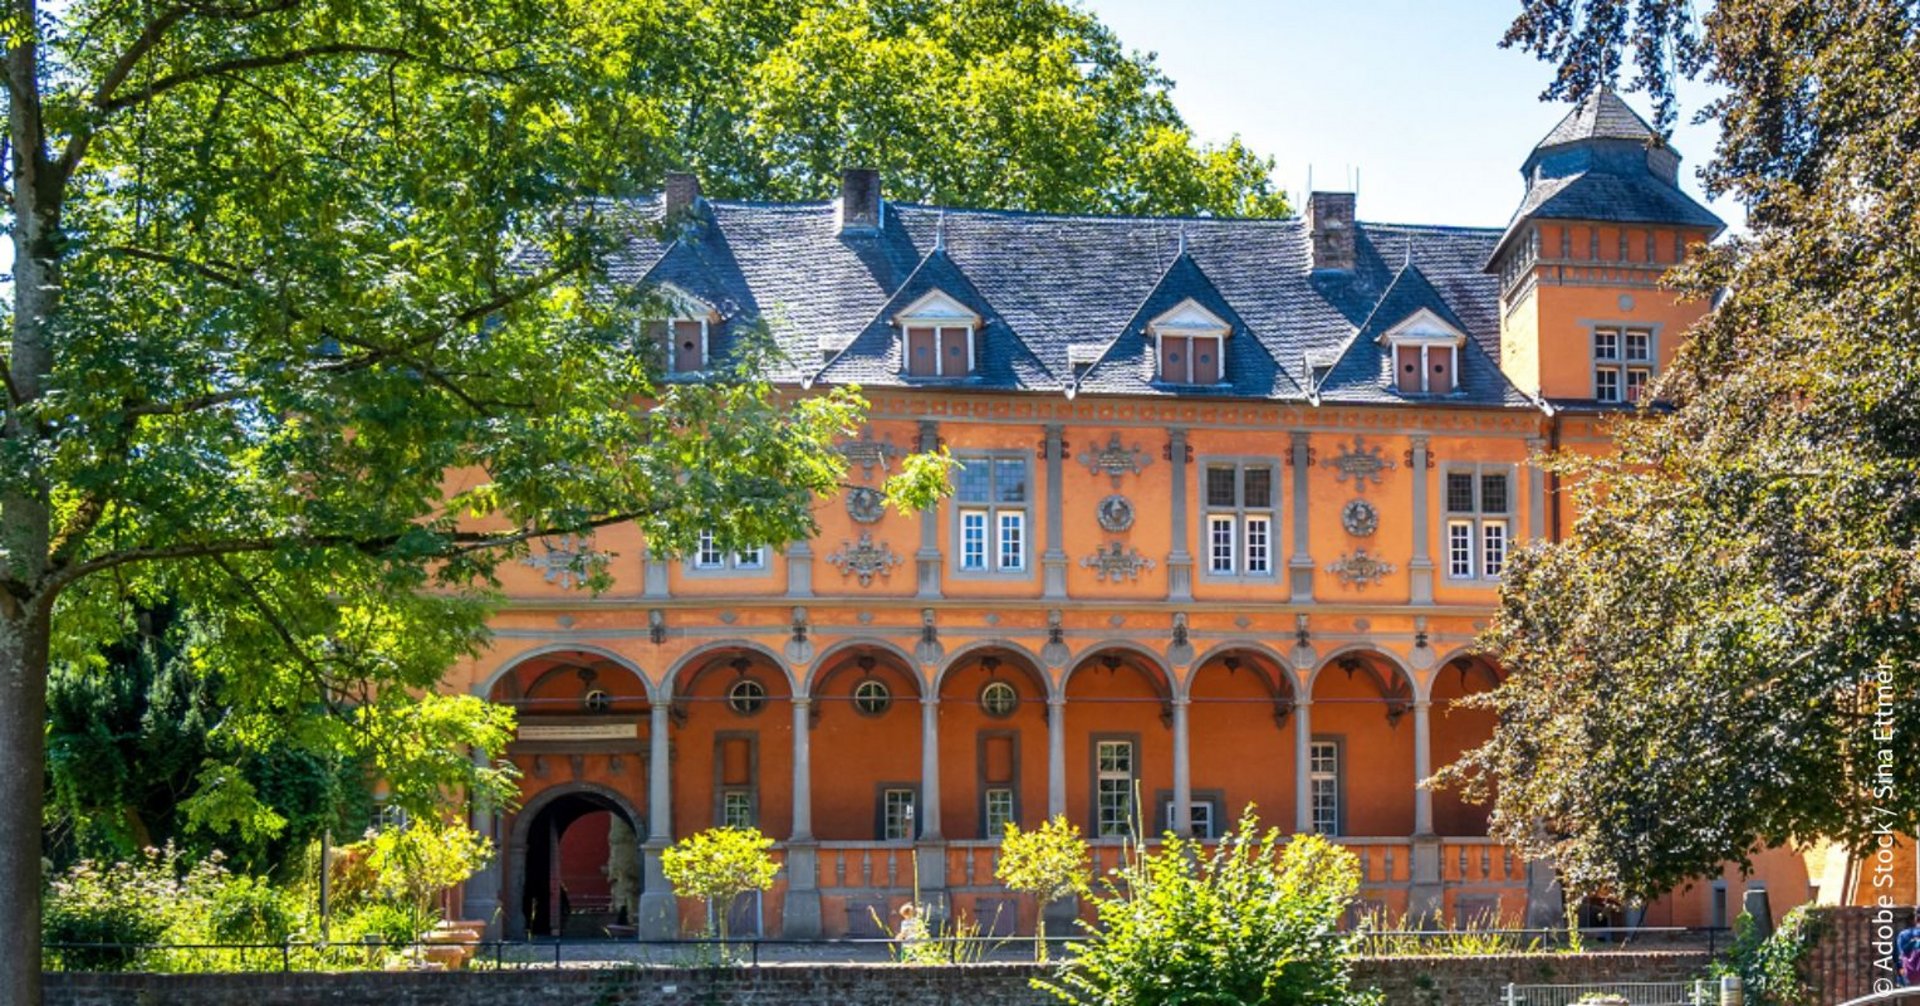  Schloss Rheyd in Mönchengladbach